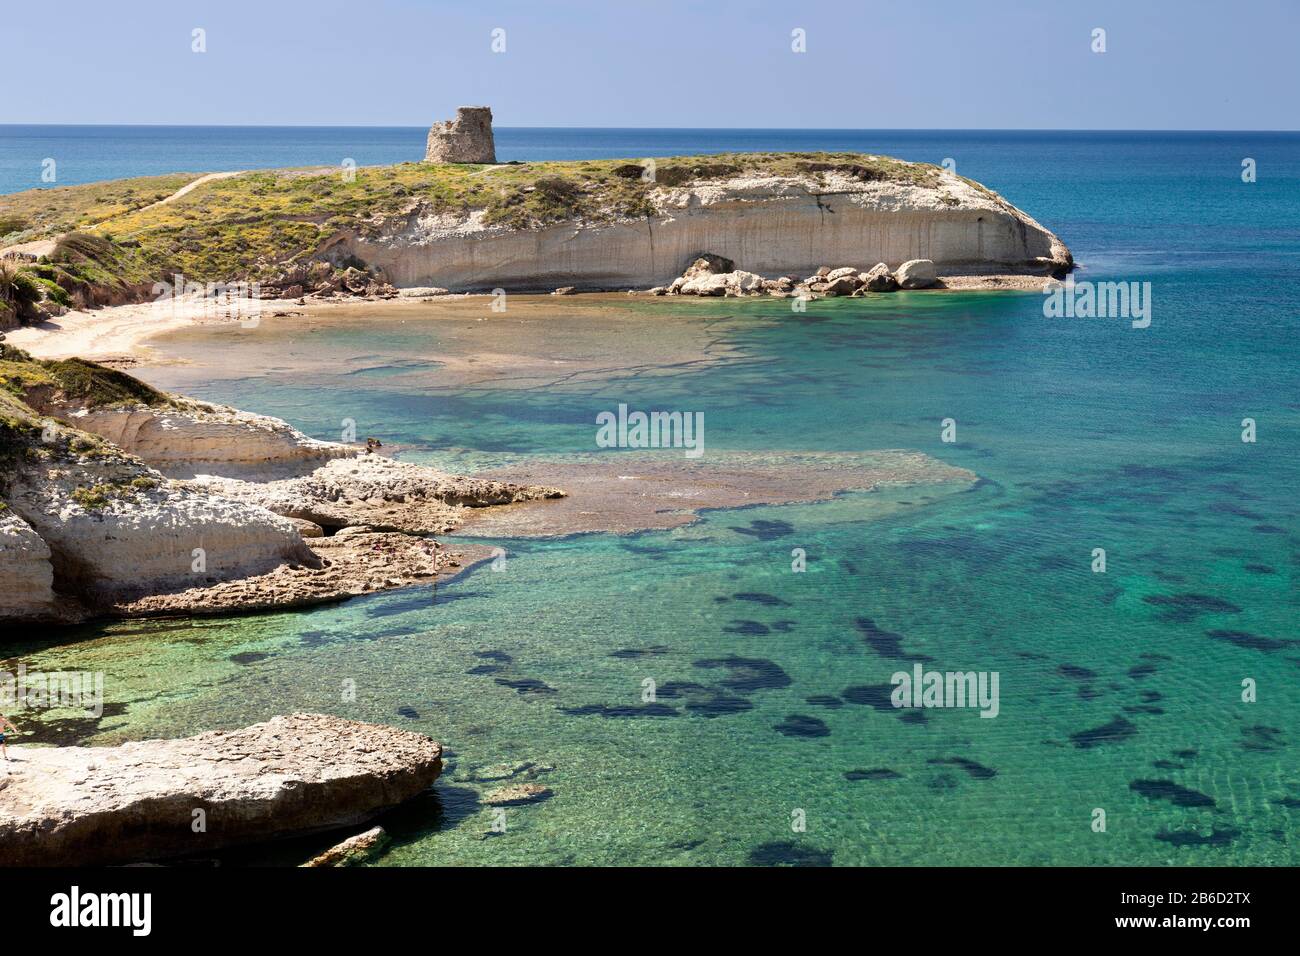 Seascape of Sardinia. Aragonese watching tower. Stock Photo